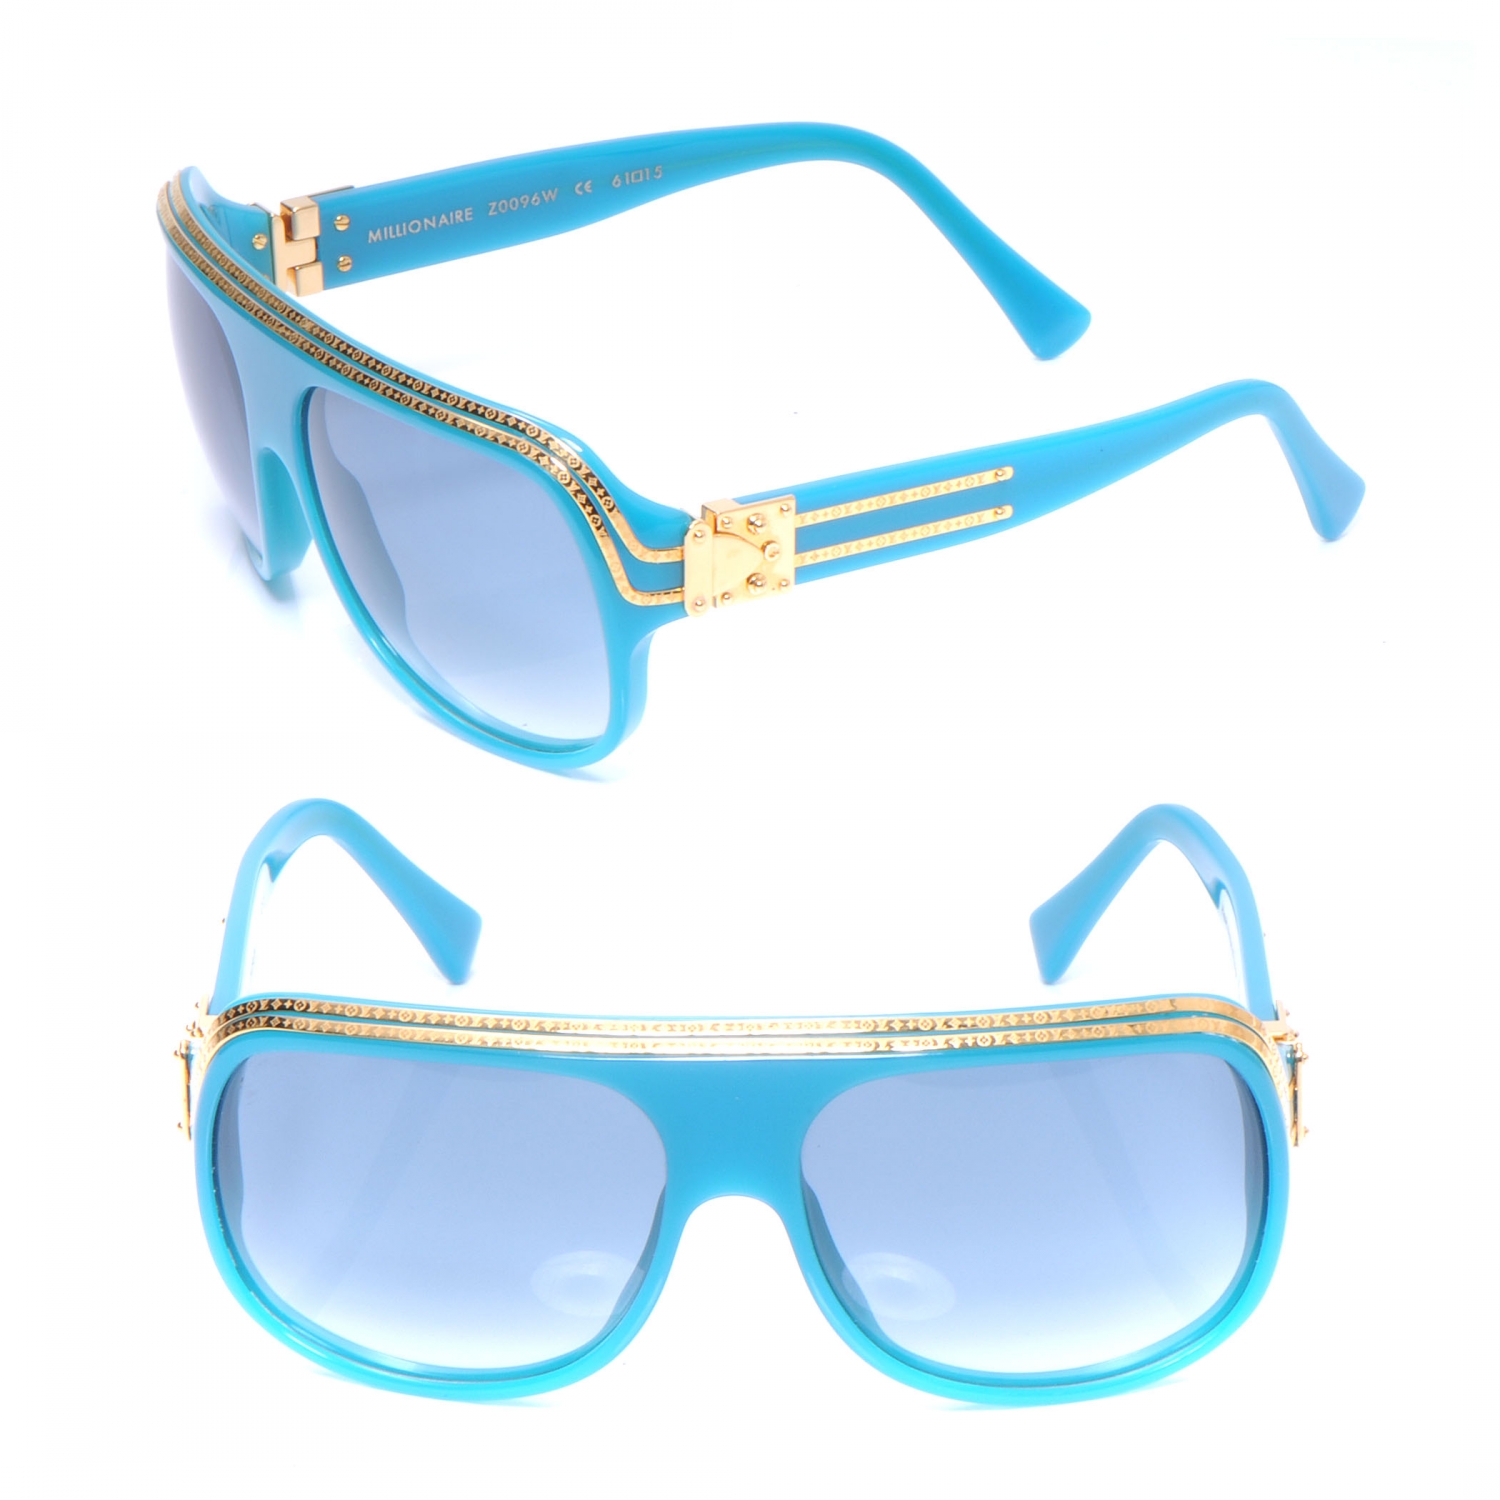 1.1 millionnaires sunglasses Louis Vuitton Turquoise in Plastic